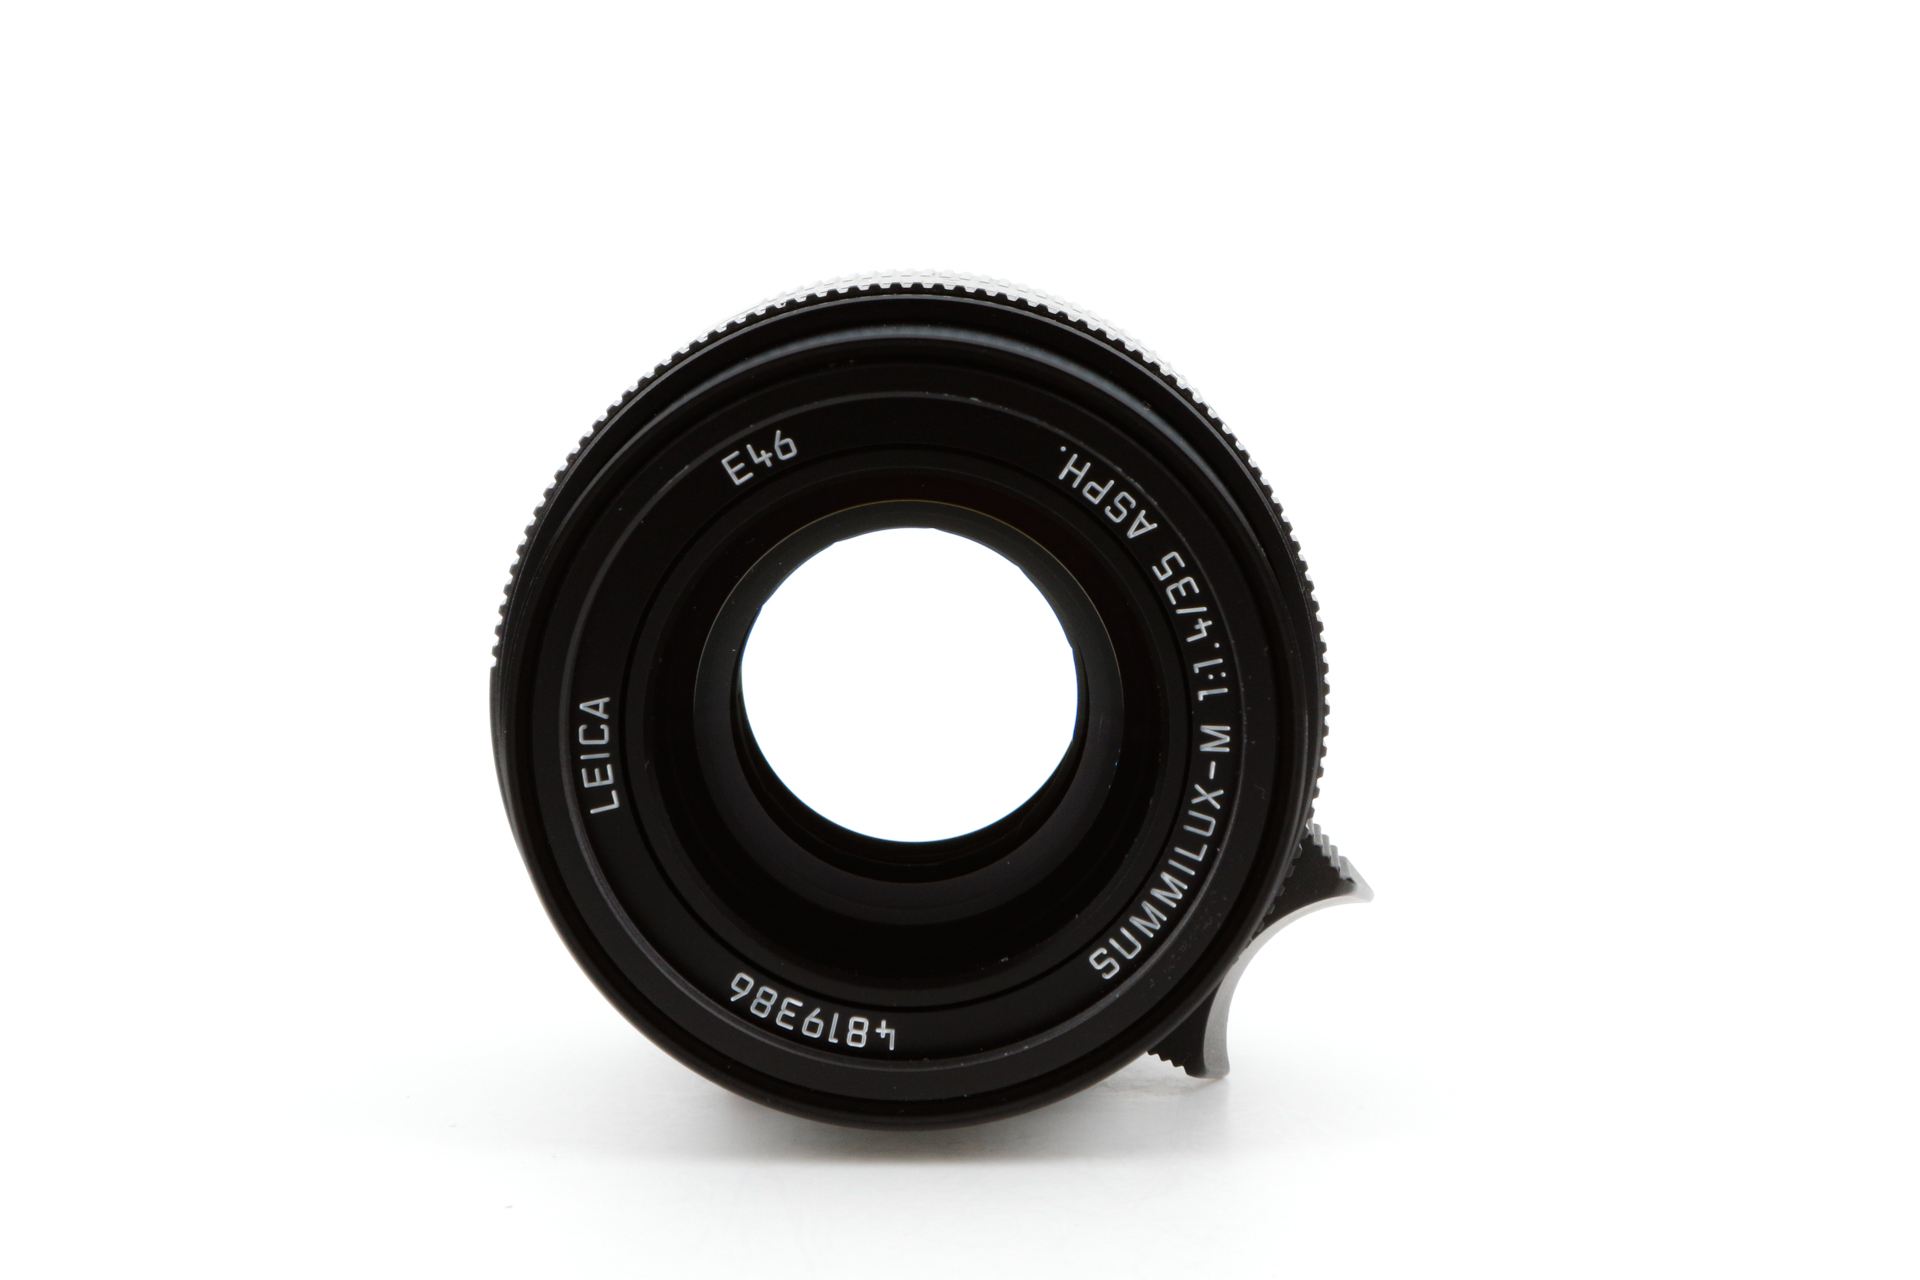 LEICA Summilux-M 1.4/35mm ASPH. 6BIT black anodized finish